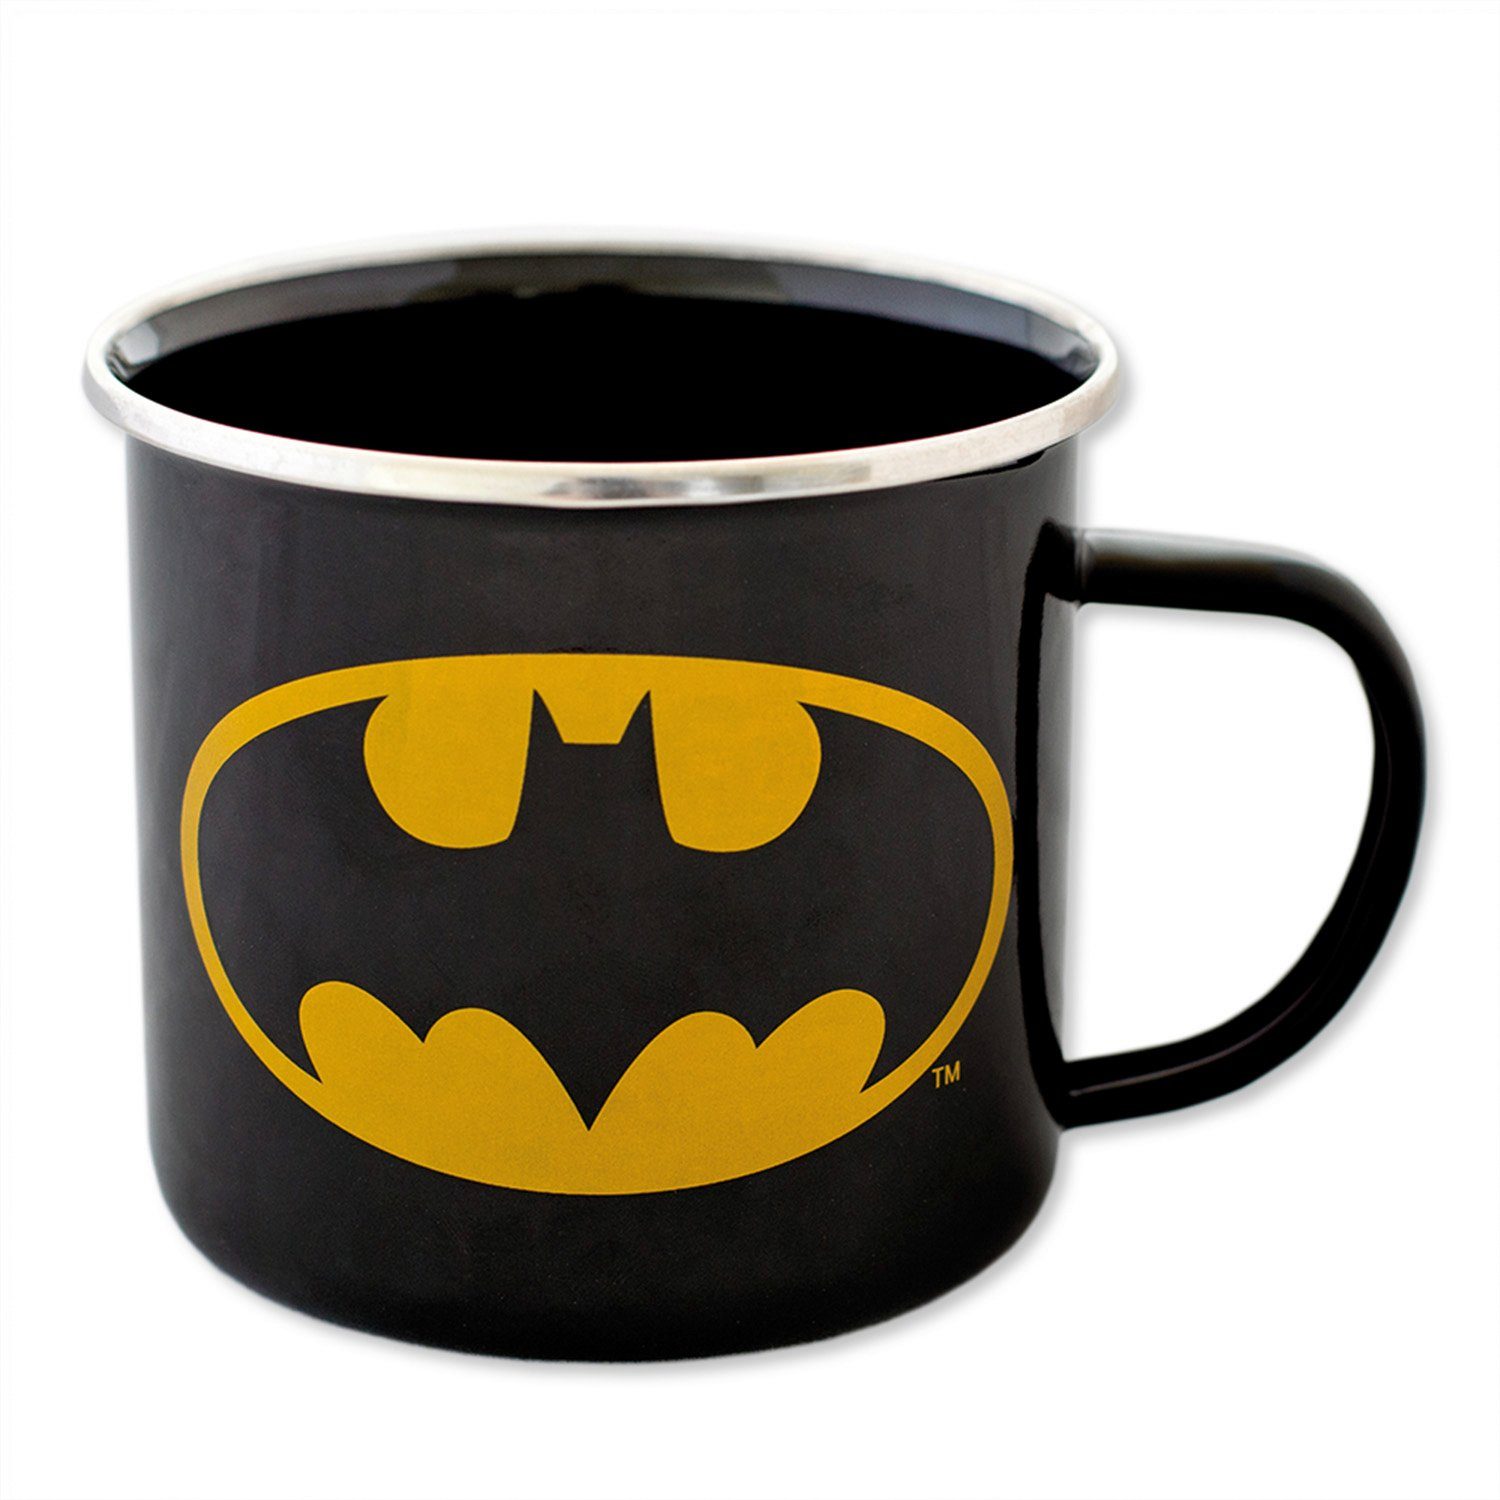 HMB Tasse Batman Tasse Emaille Tasse